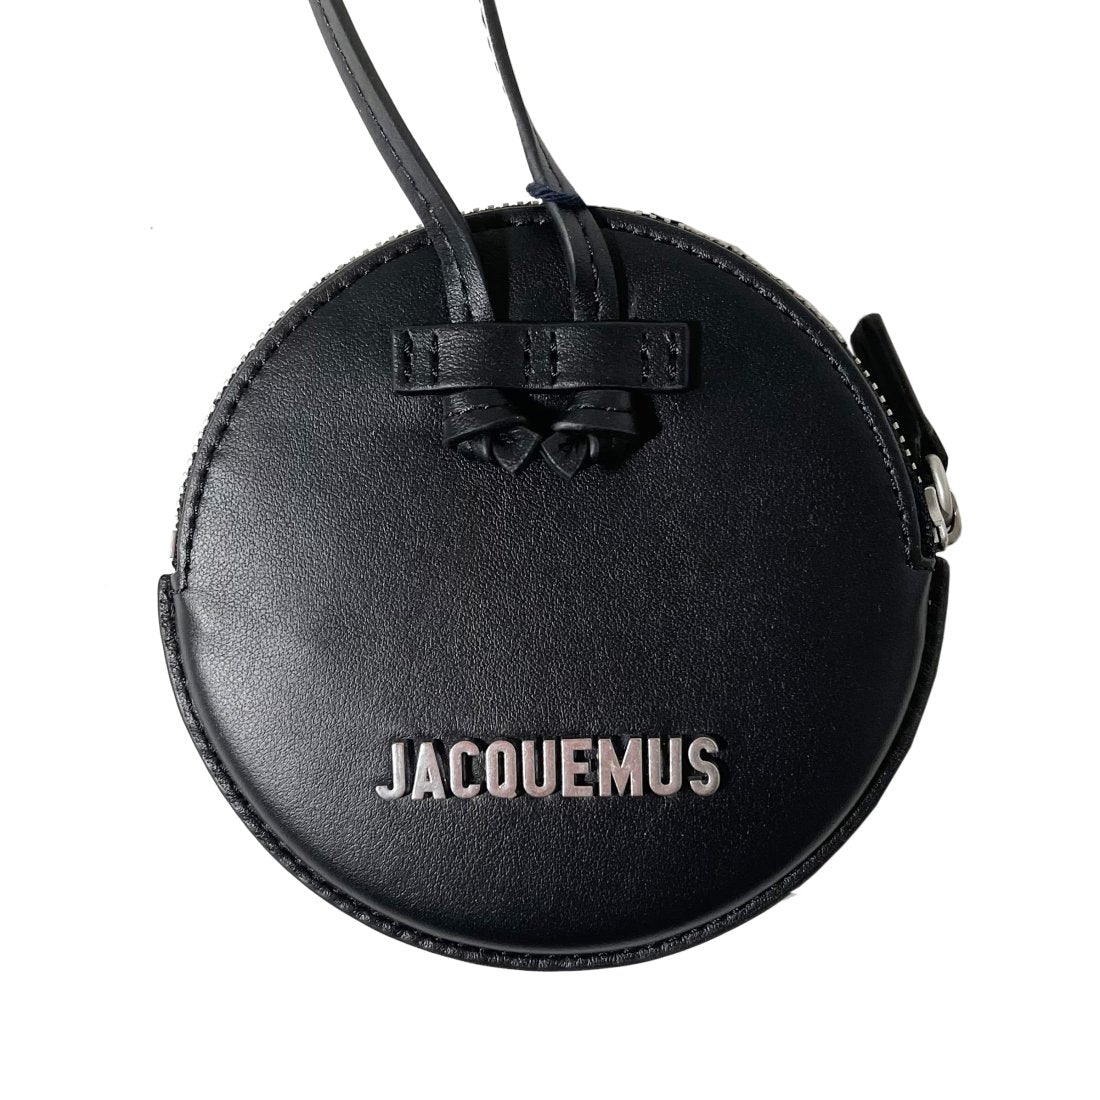 JACQUEMUS / MINI BAG